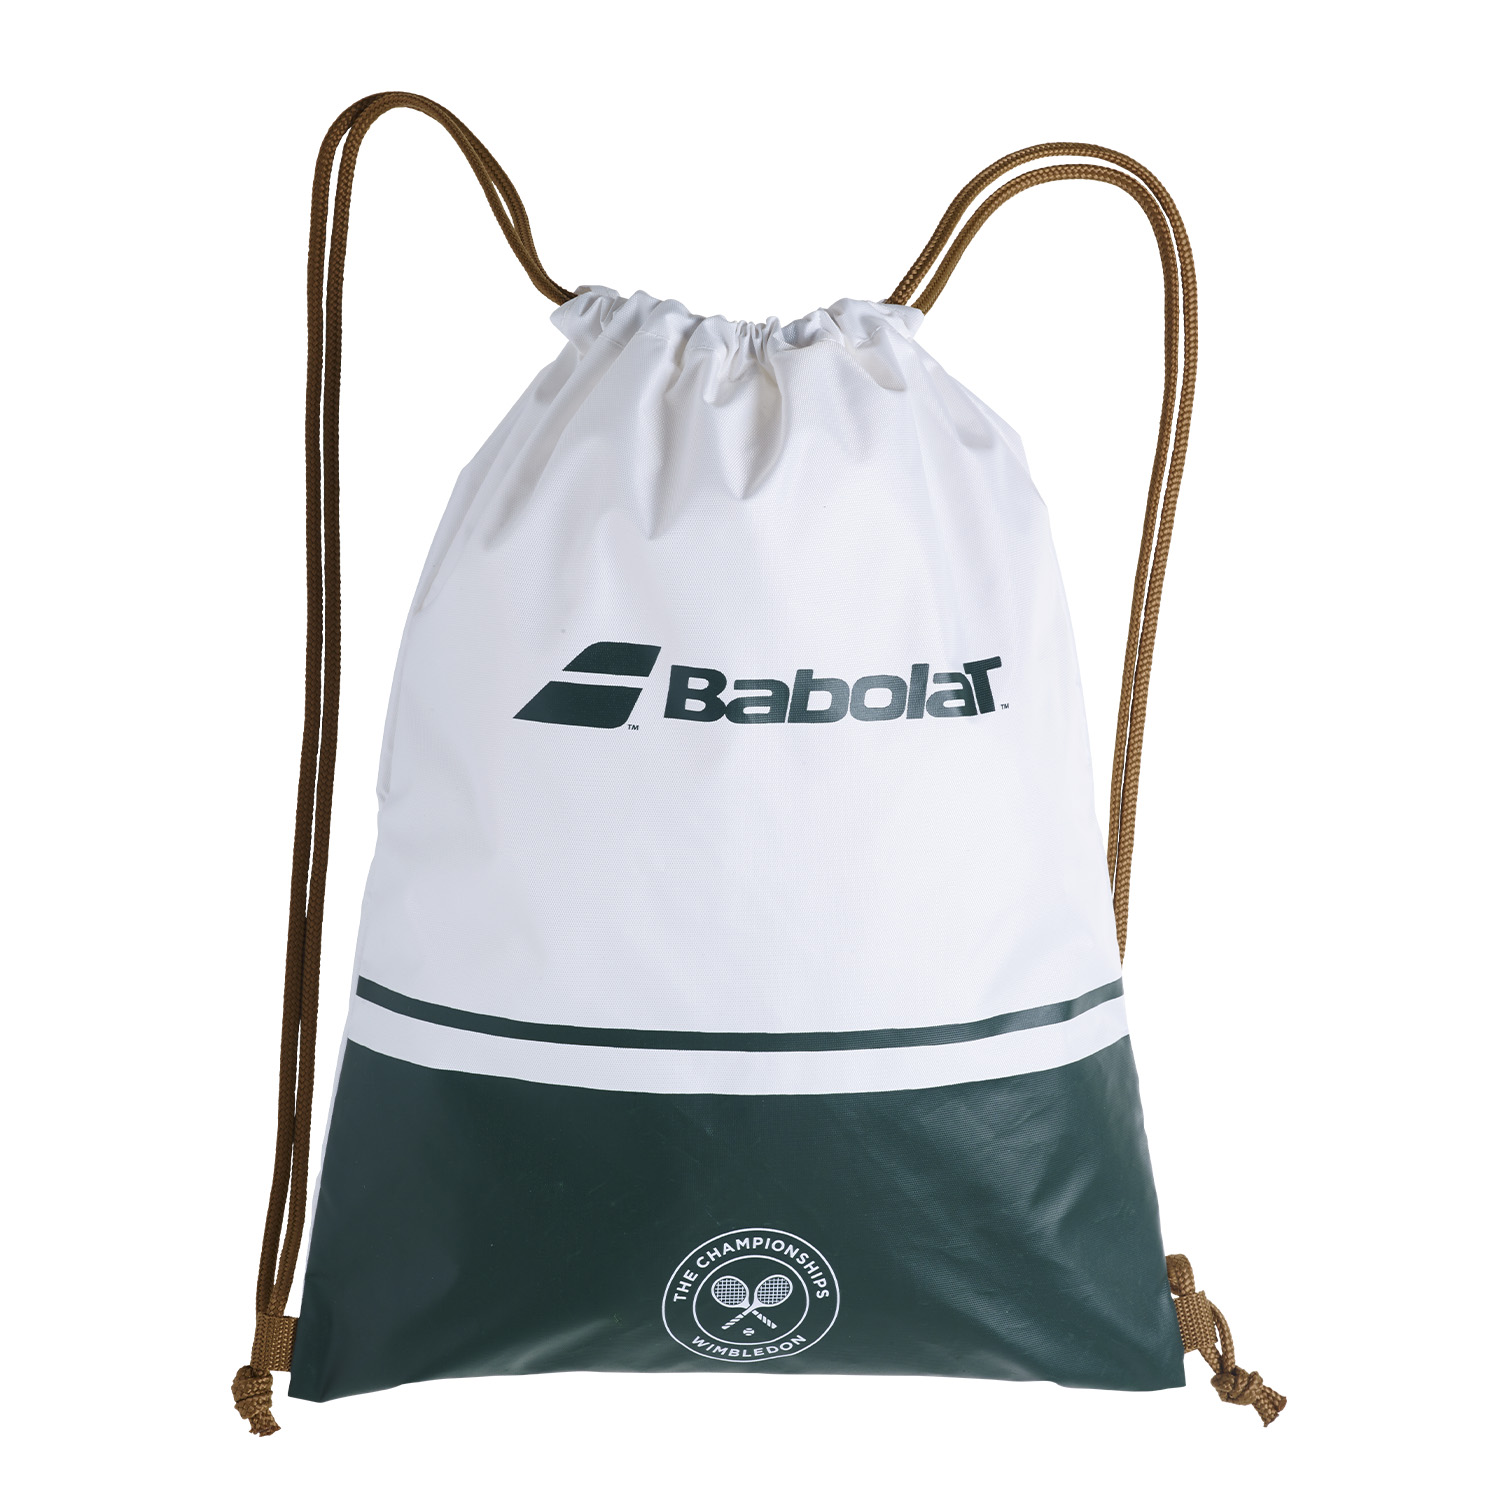 Babolat Gym Wimbledon Sackpack - White/Green